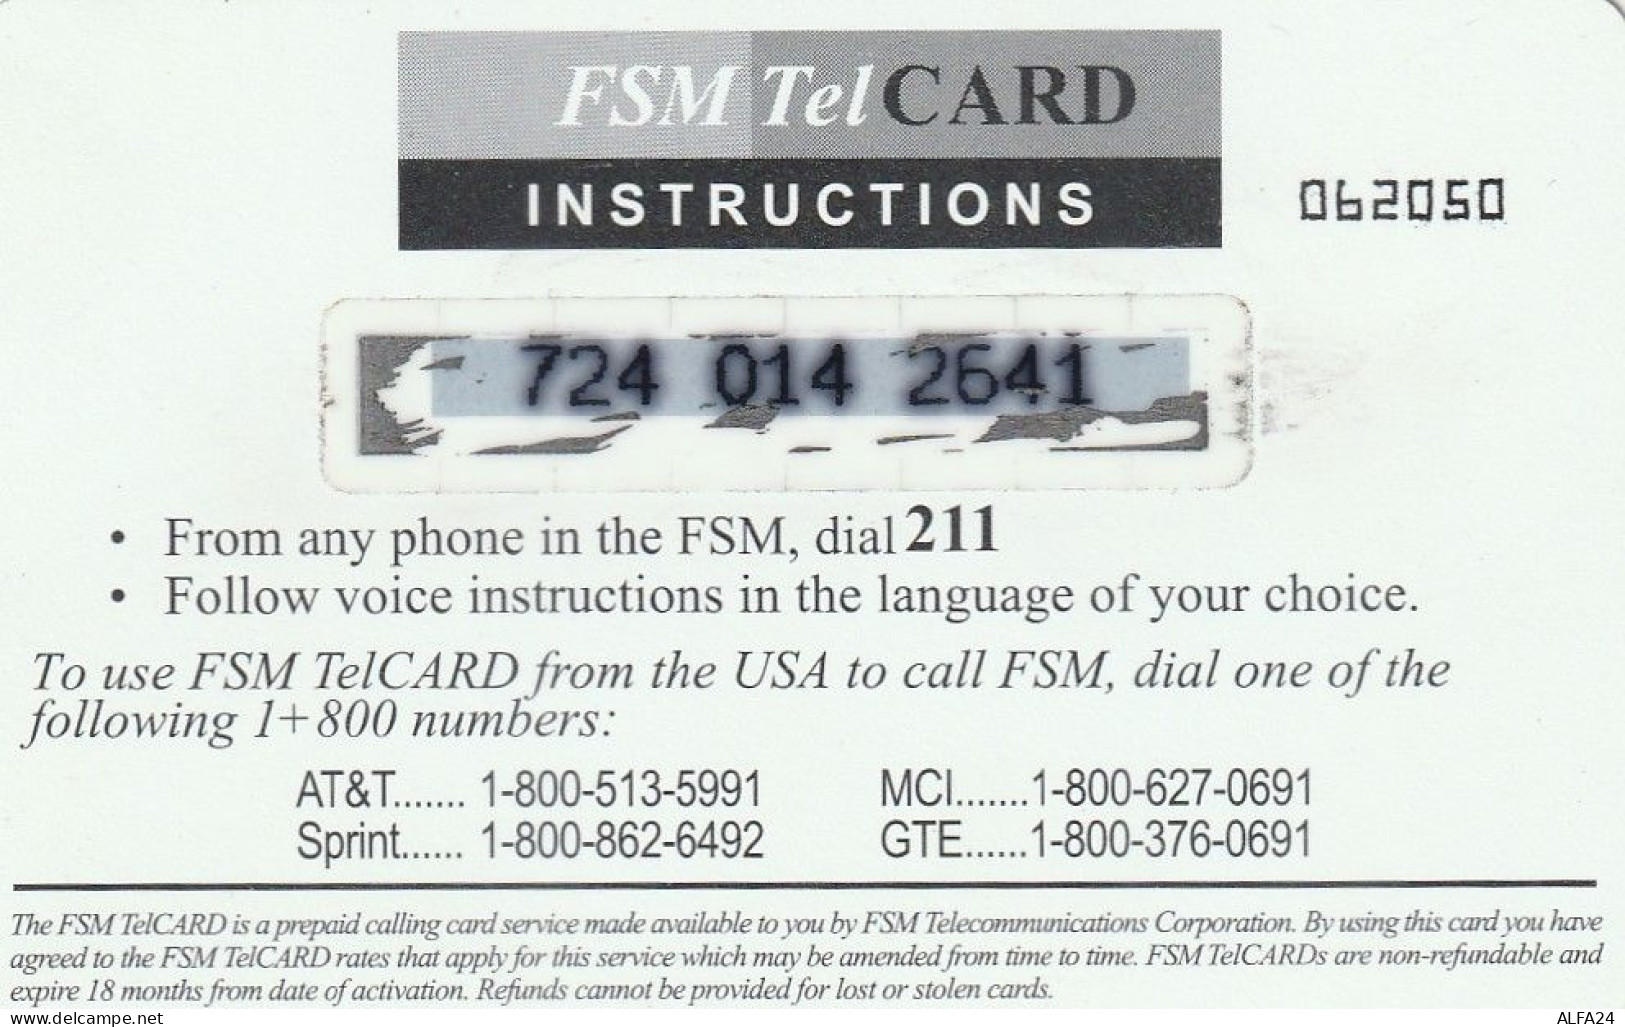 PREPAID PHONE CARD MICRONESIA  (E5.20.4 - Micronesia